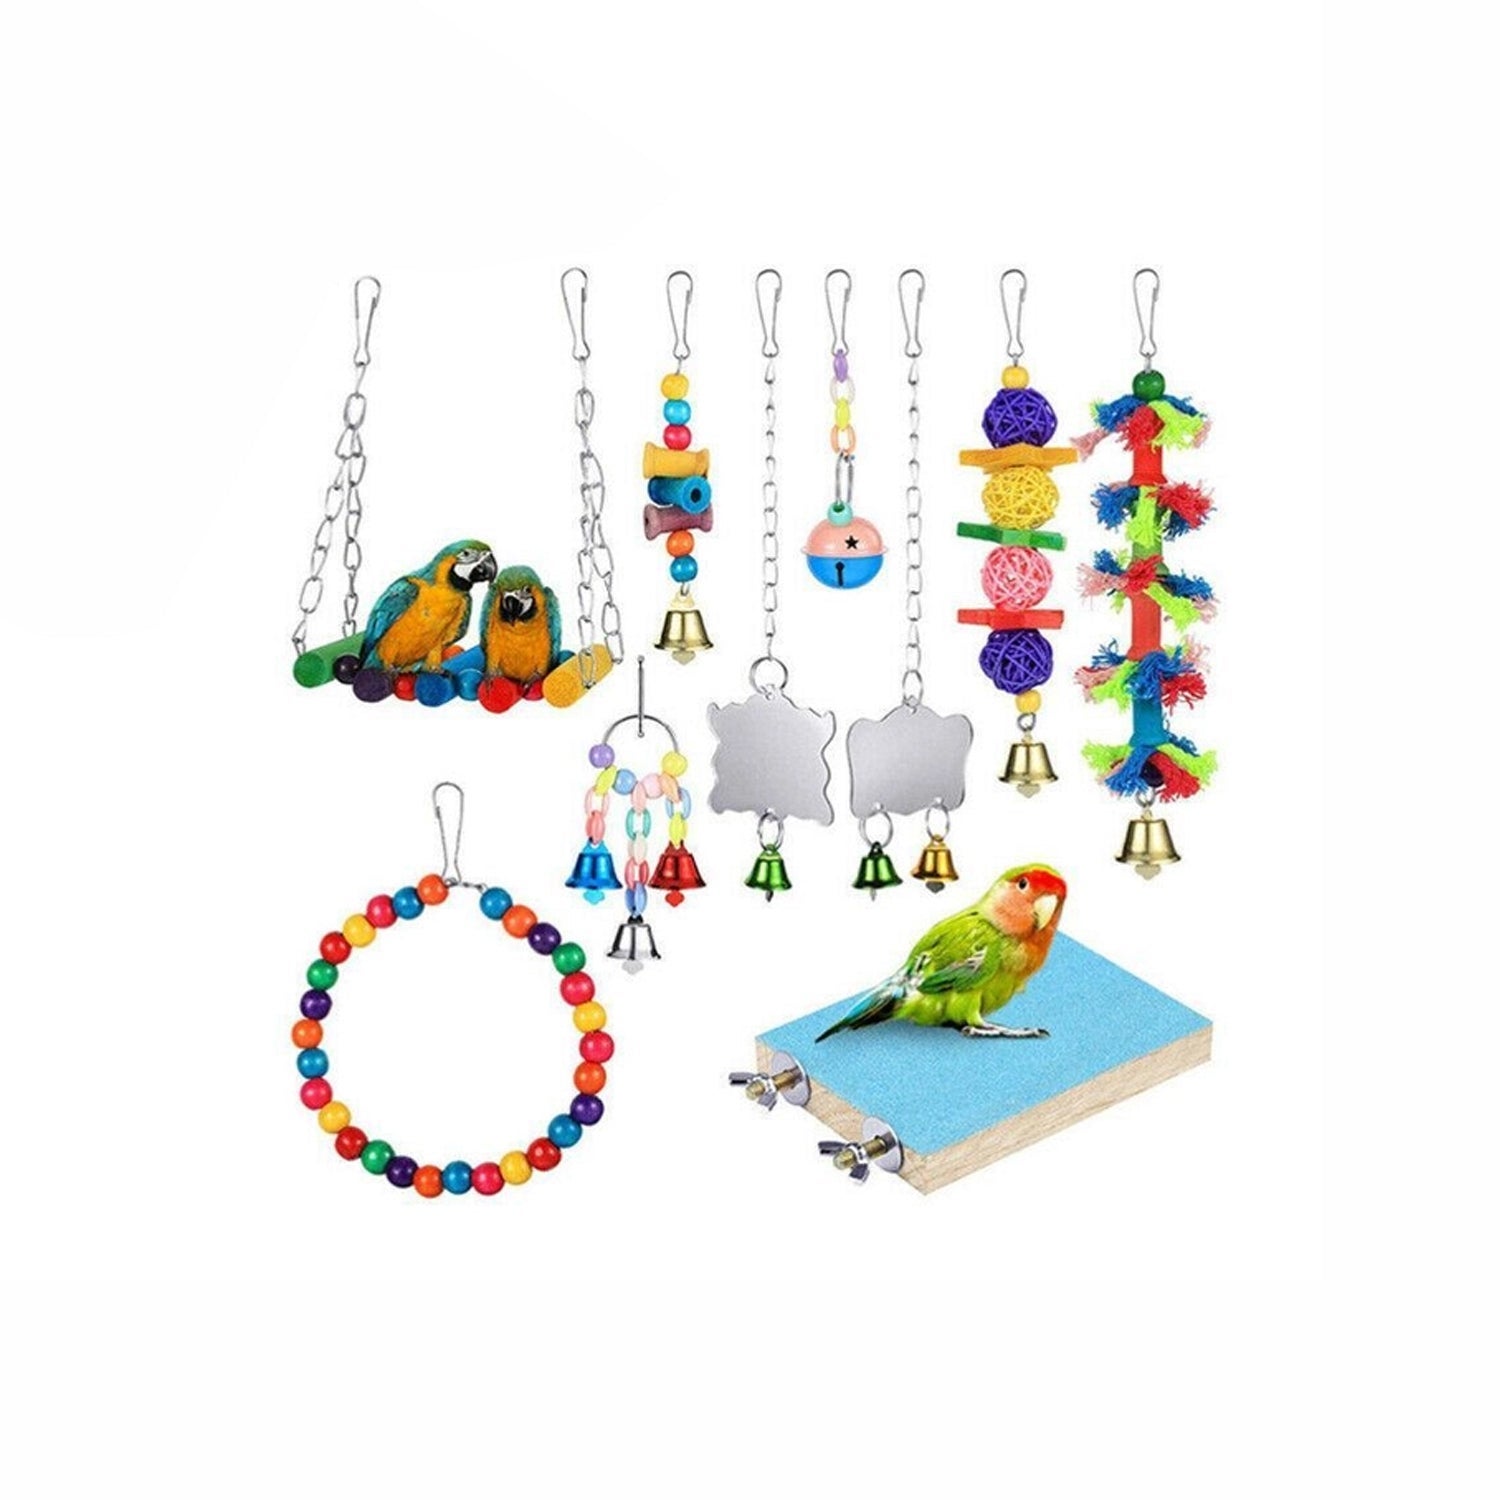 Parrot Hanging Swing Bird Cage Toys - 10pcs